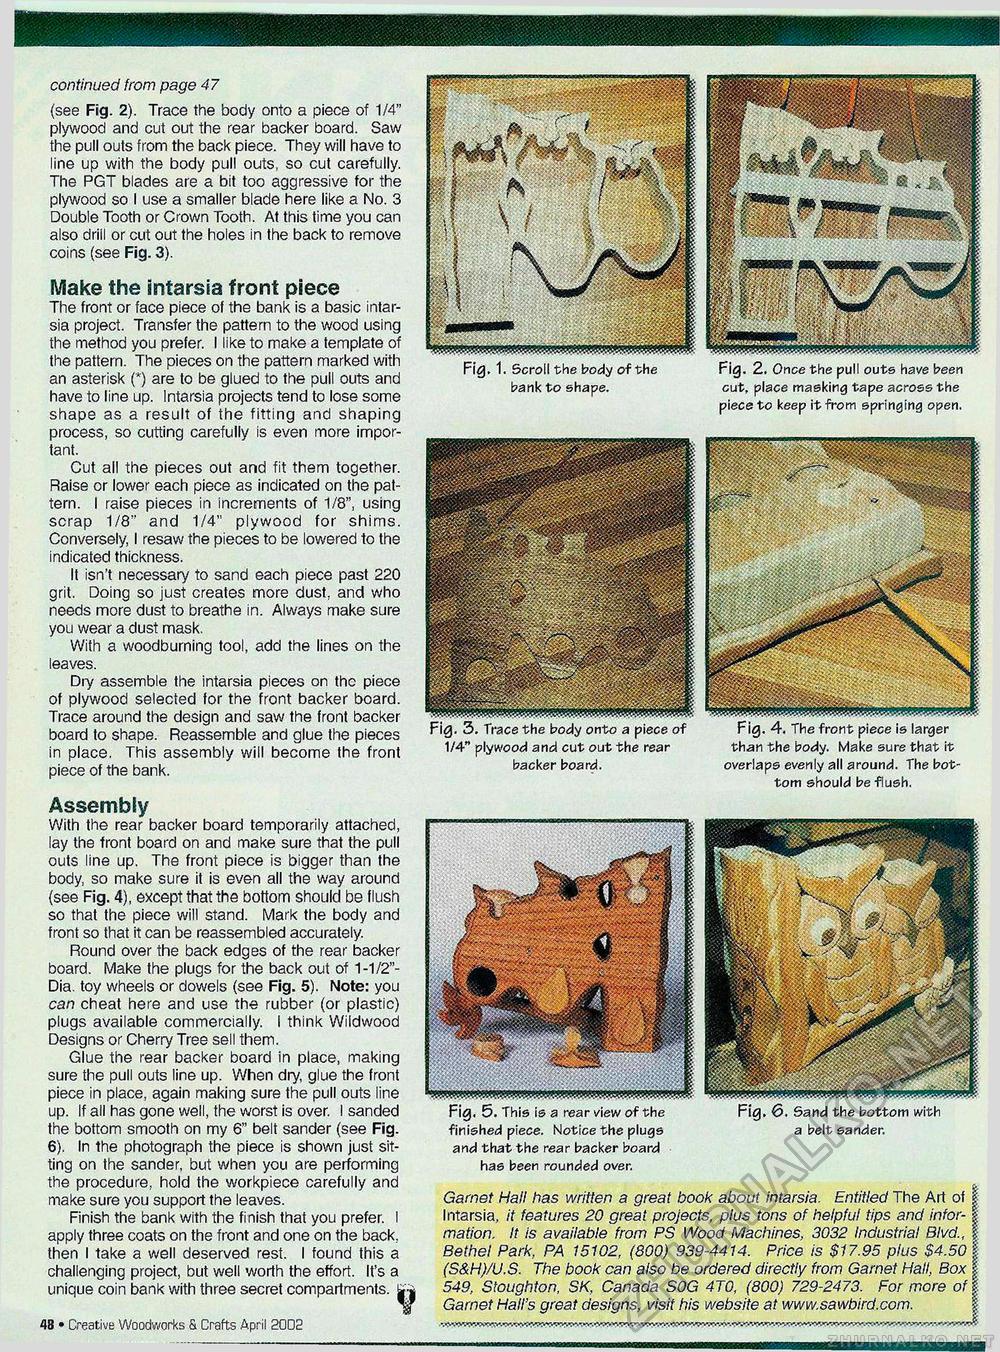 Creative Woodworks & crafts 2002-04,  48